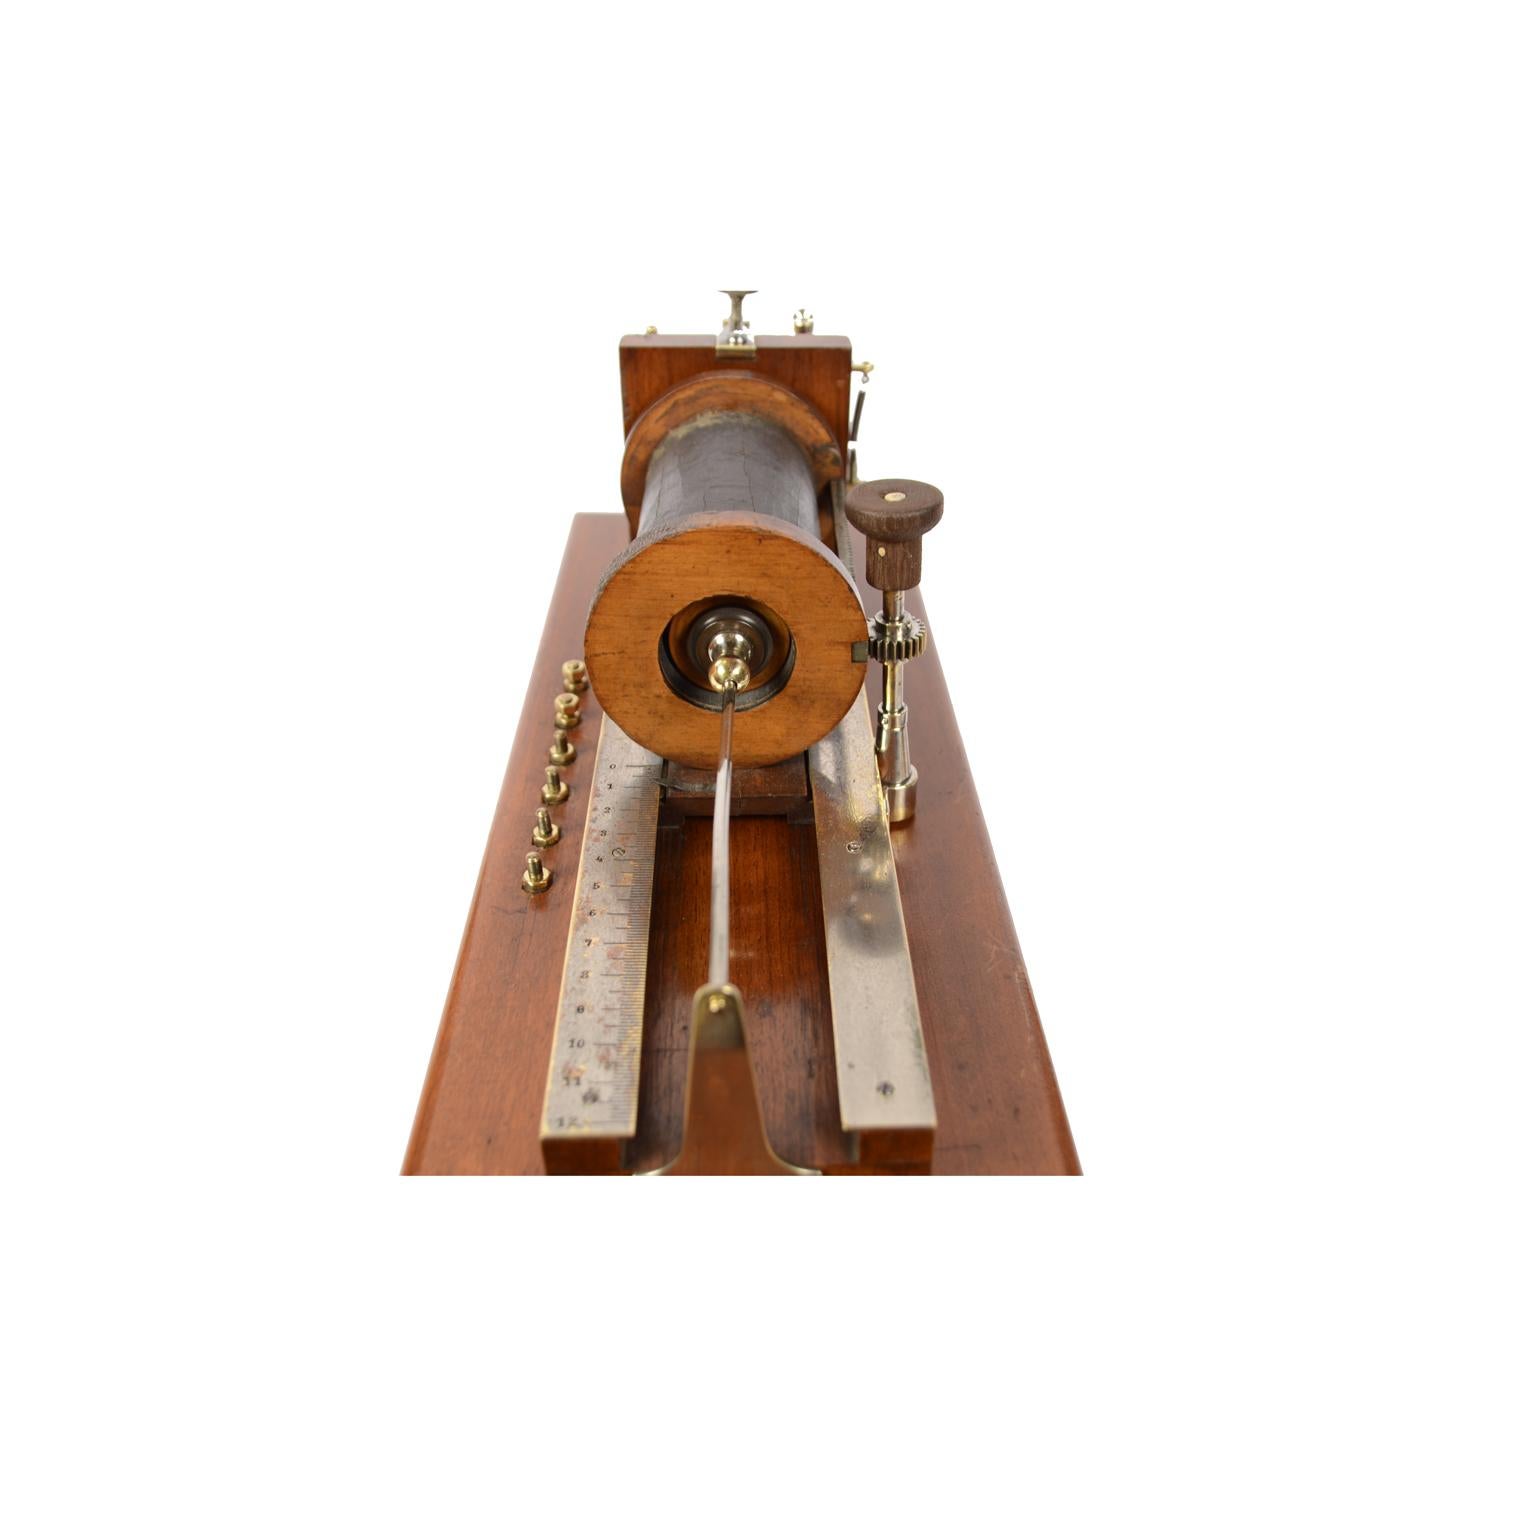 Induction Coil or Sled Antique Scientific Instrument by Du Bois Reymond 1870  For Sale 1